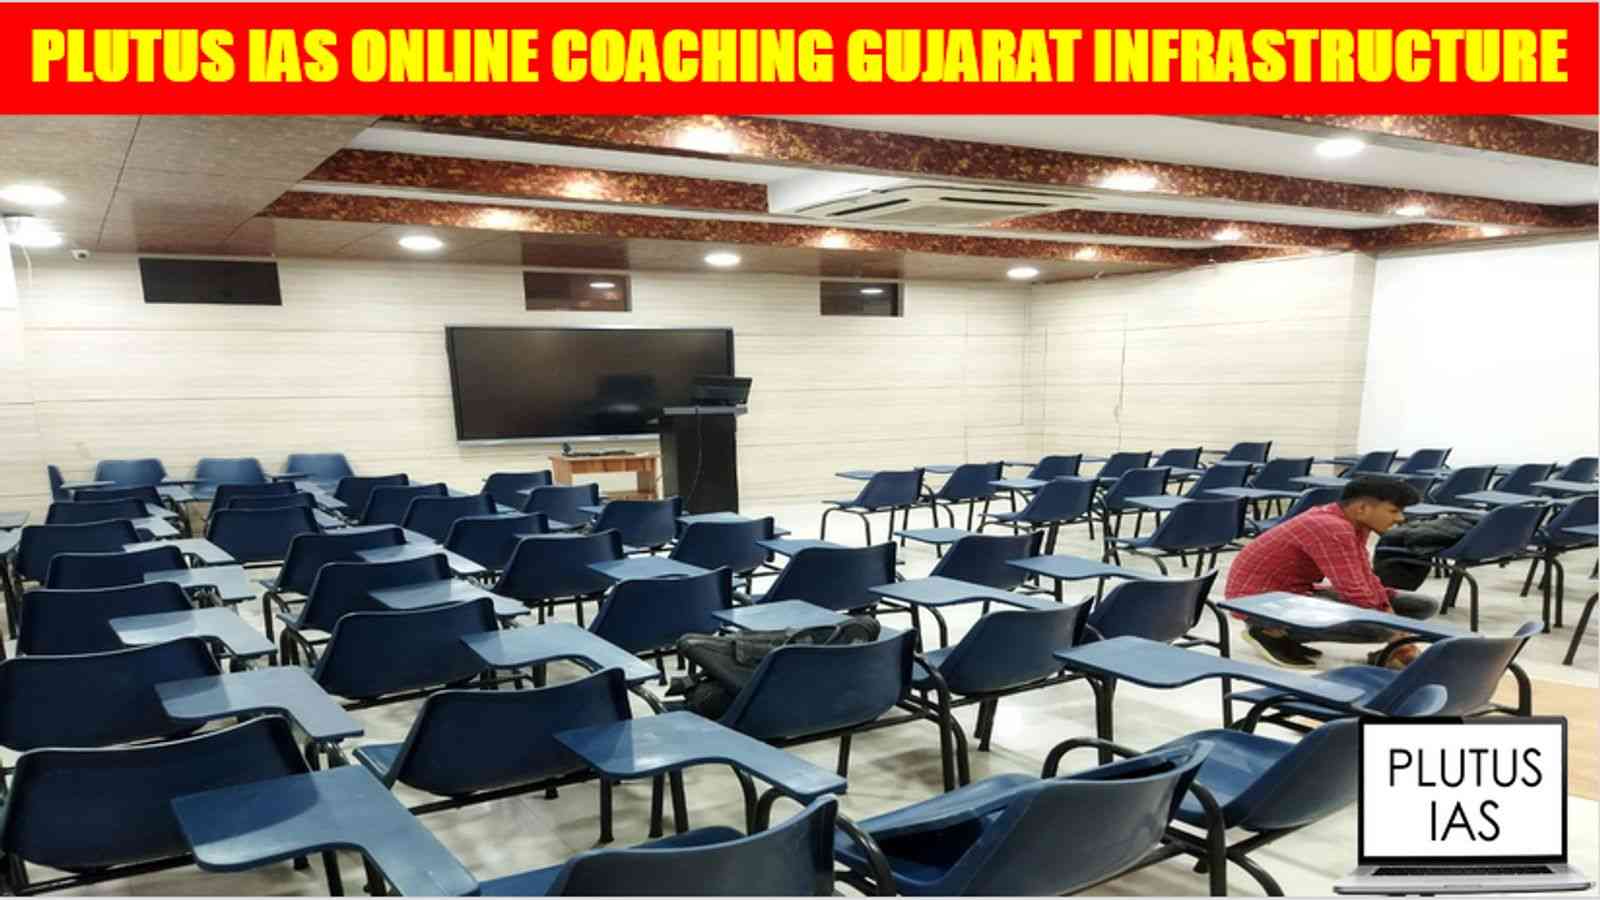 Plutus IAS Online Coaching Gujarat Infrastructure